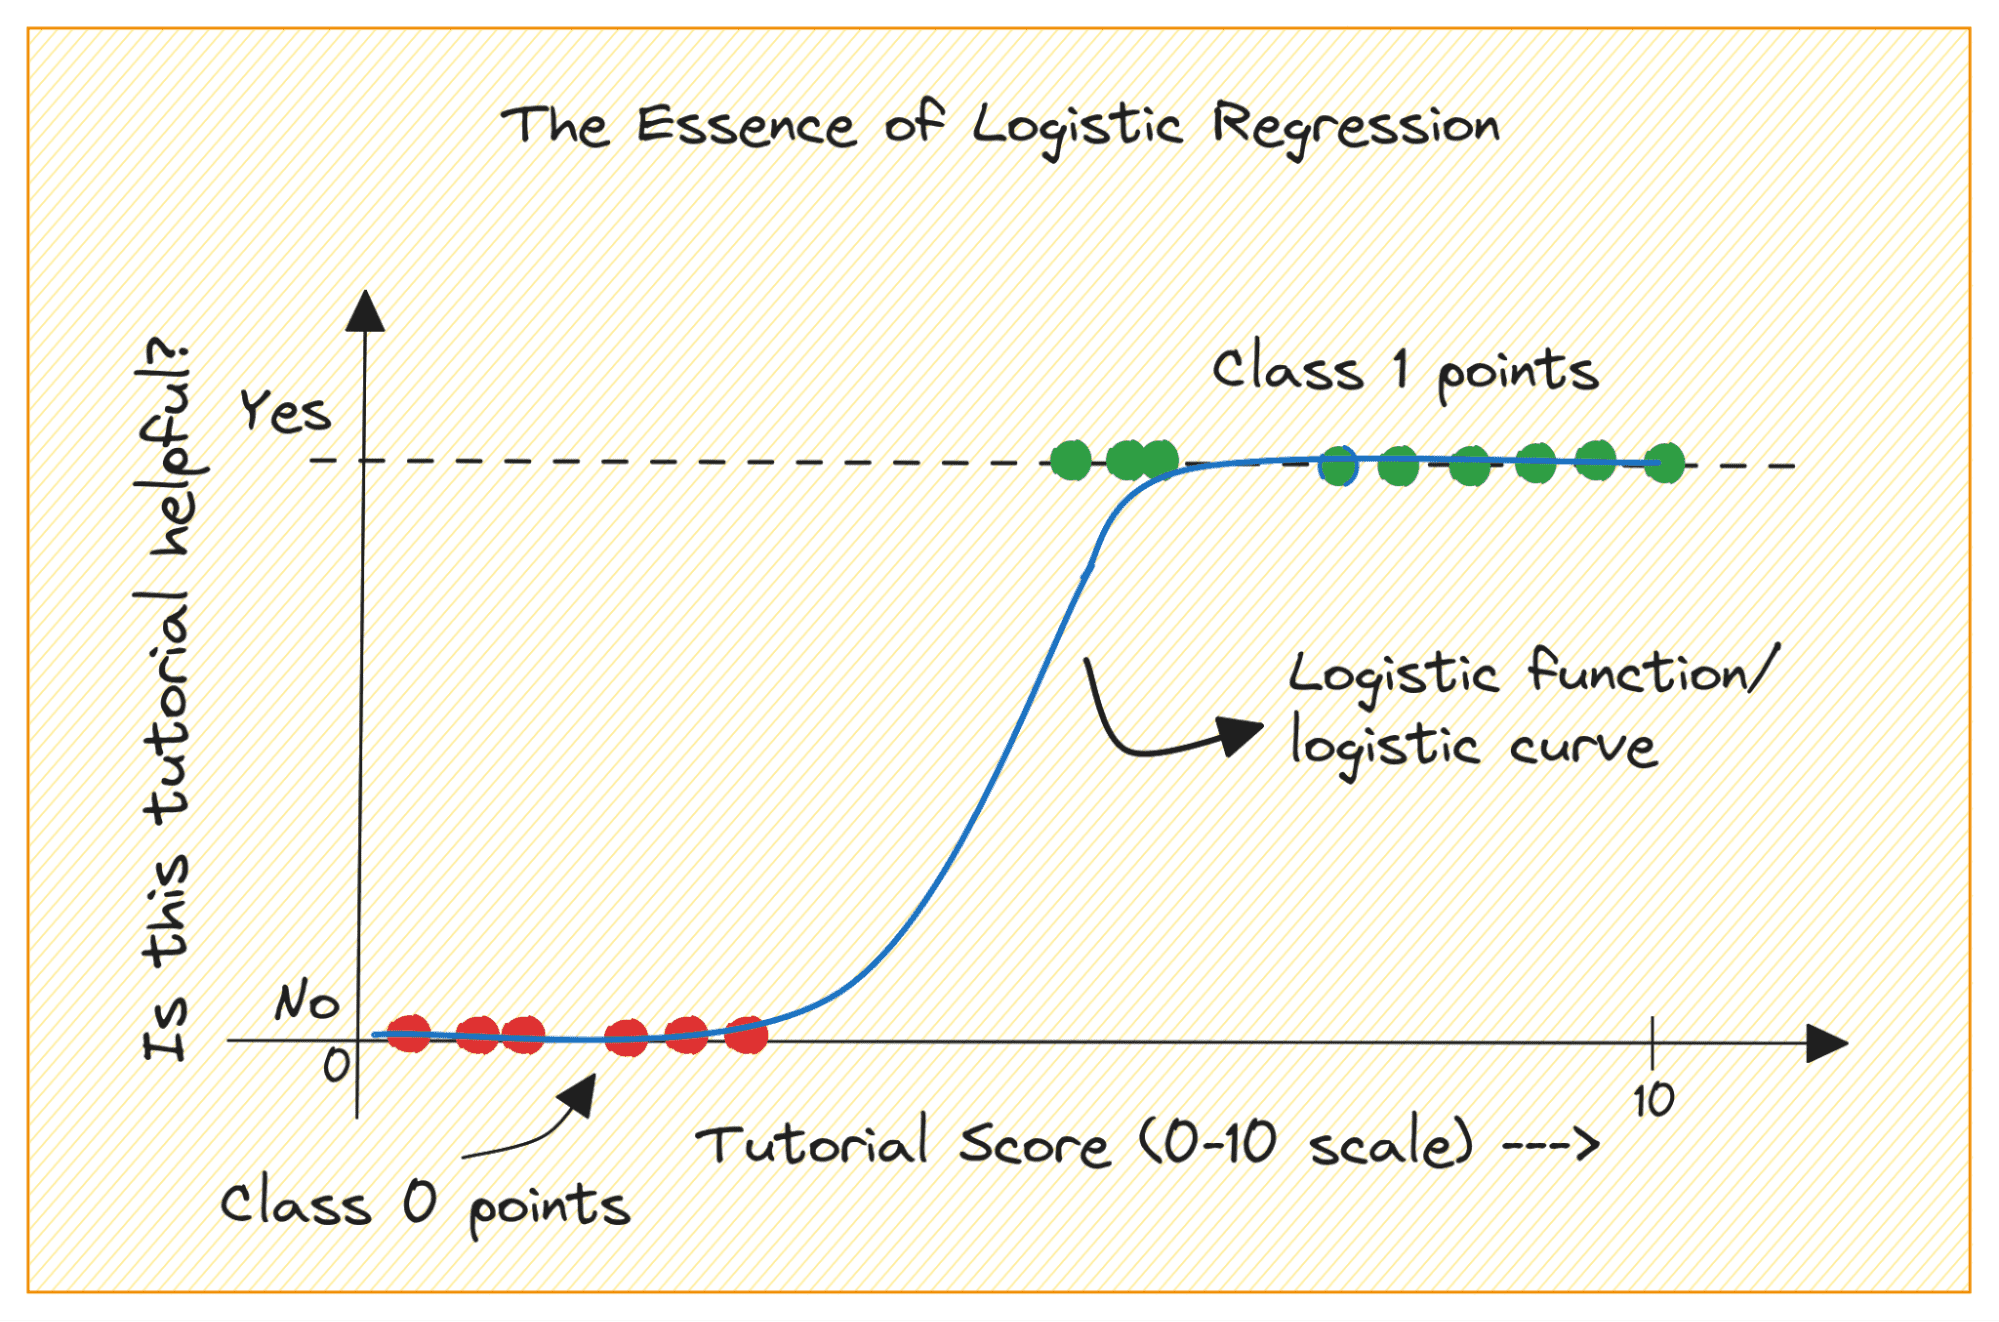 Bygga prediktiva modeller: logistisk regression i Python - KDnuggets